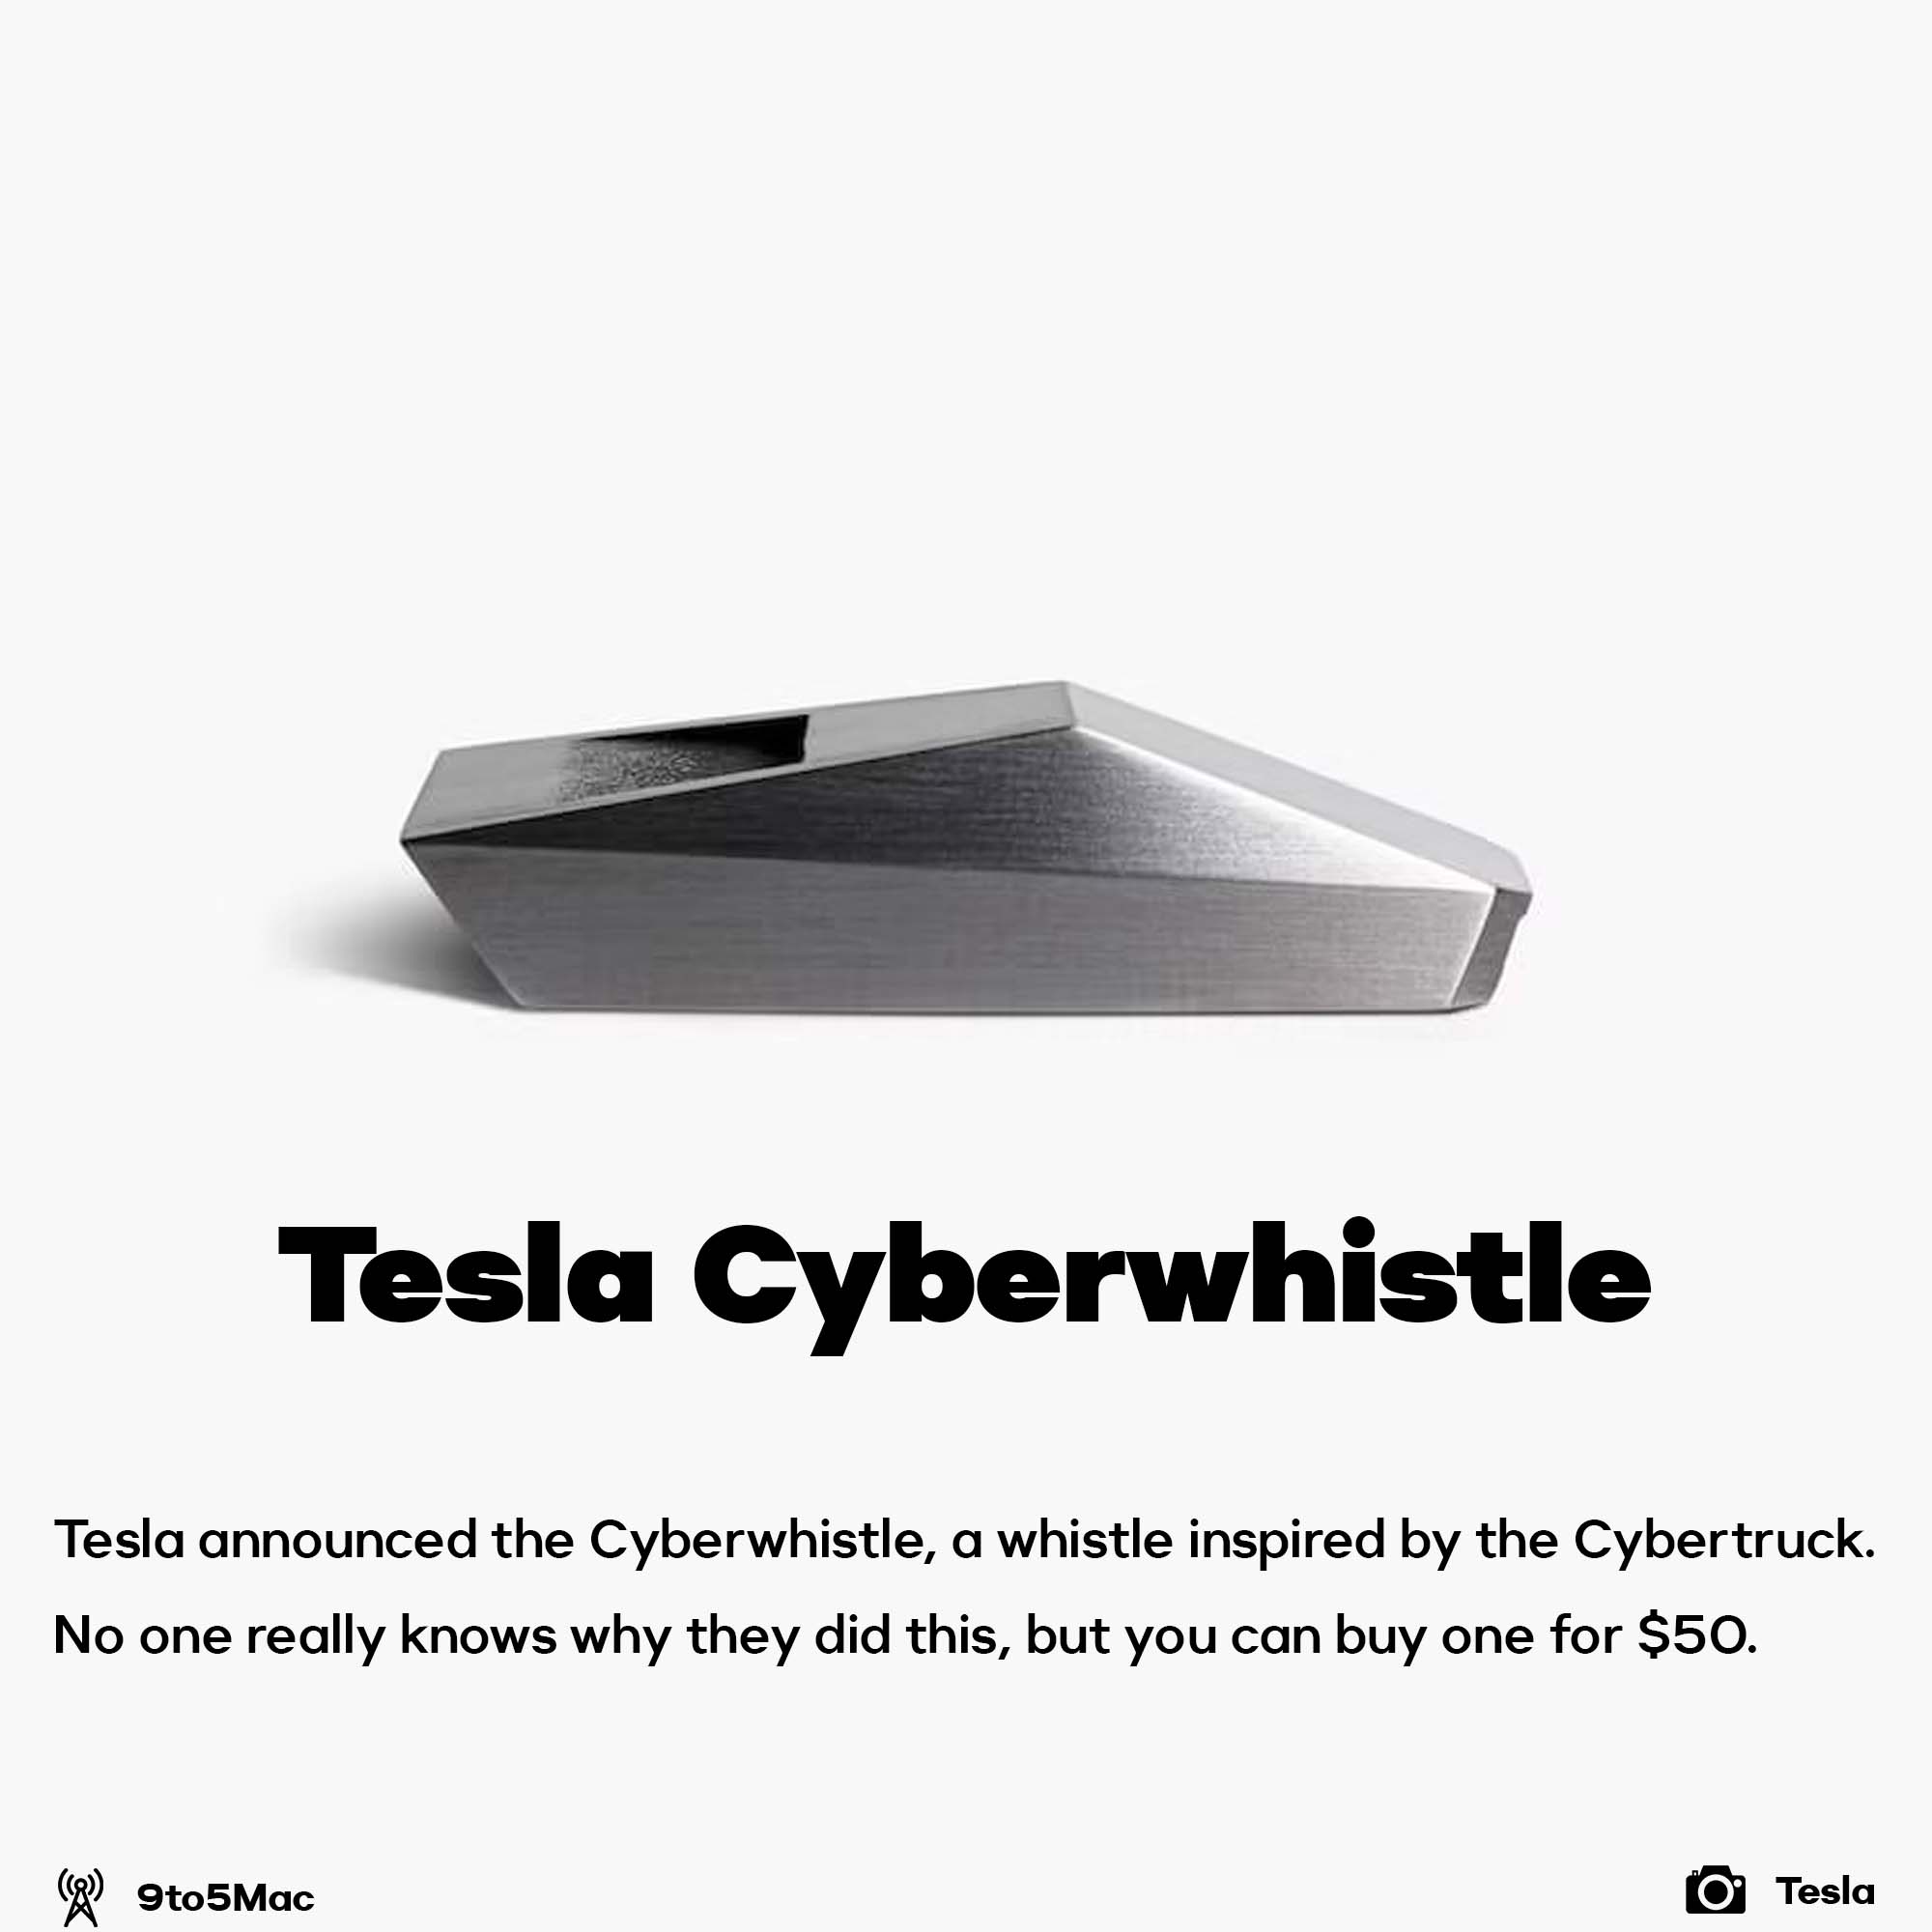 Tesla announced the Cyberwhistle